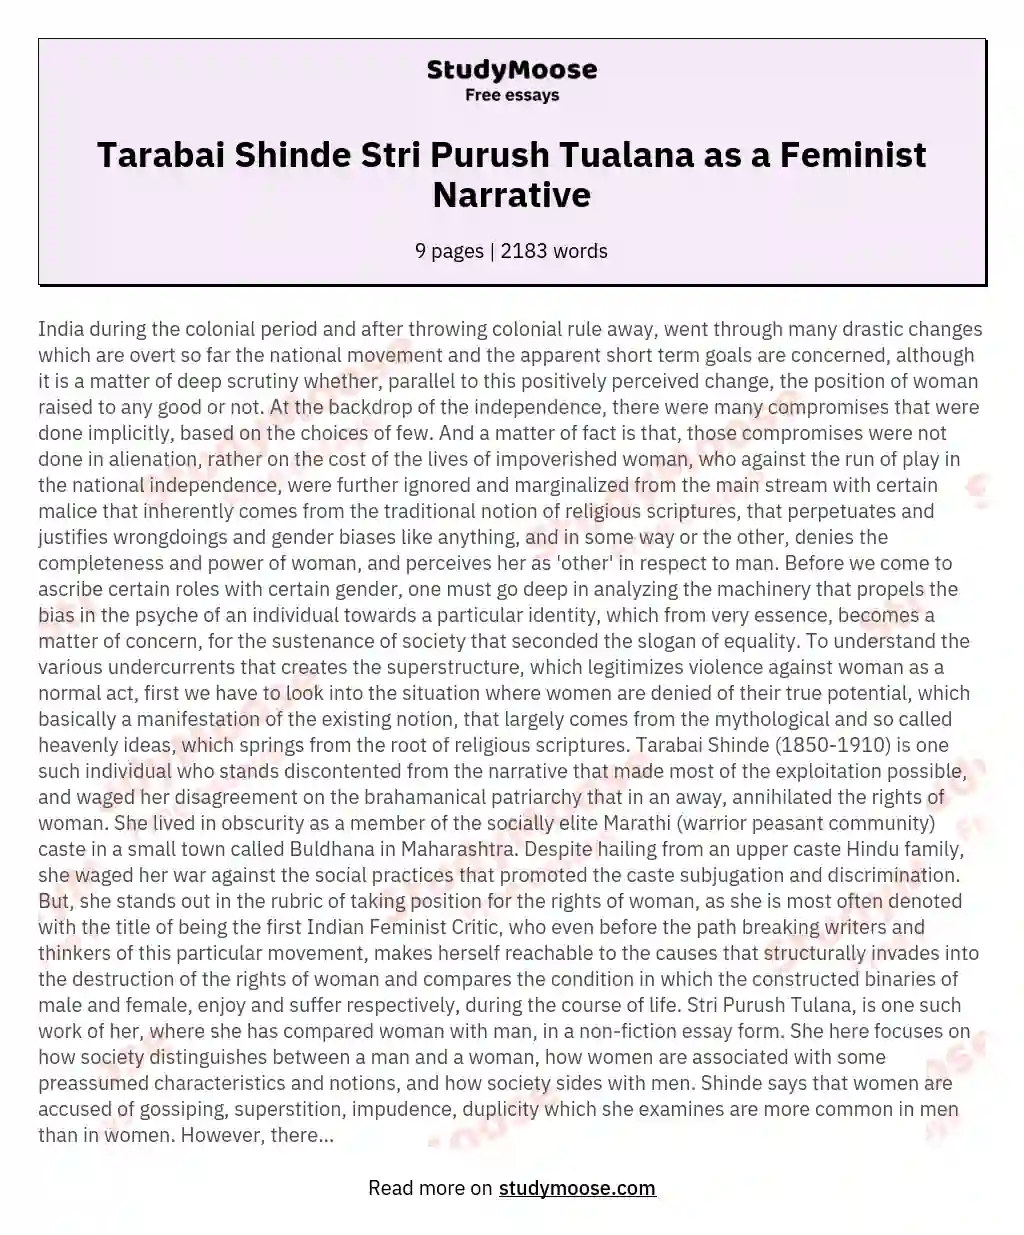 Tarabai Shinde Stri Purush Tualana as a Feminist Narrative essay